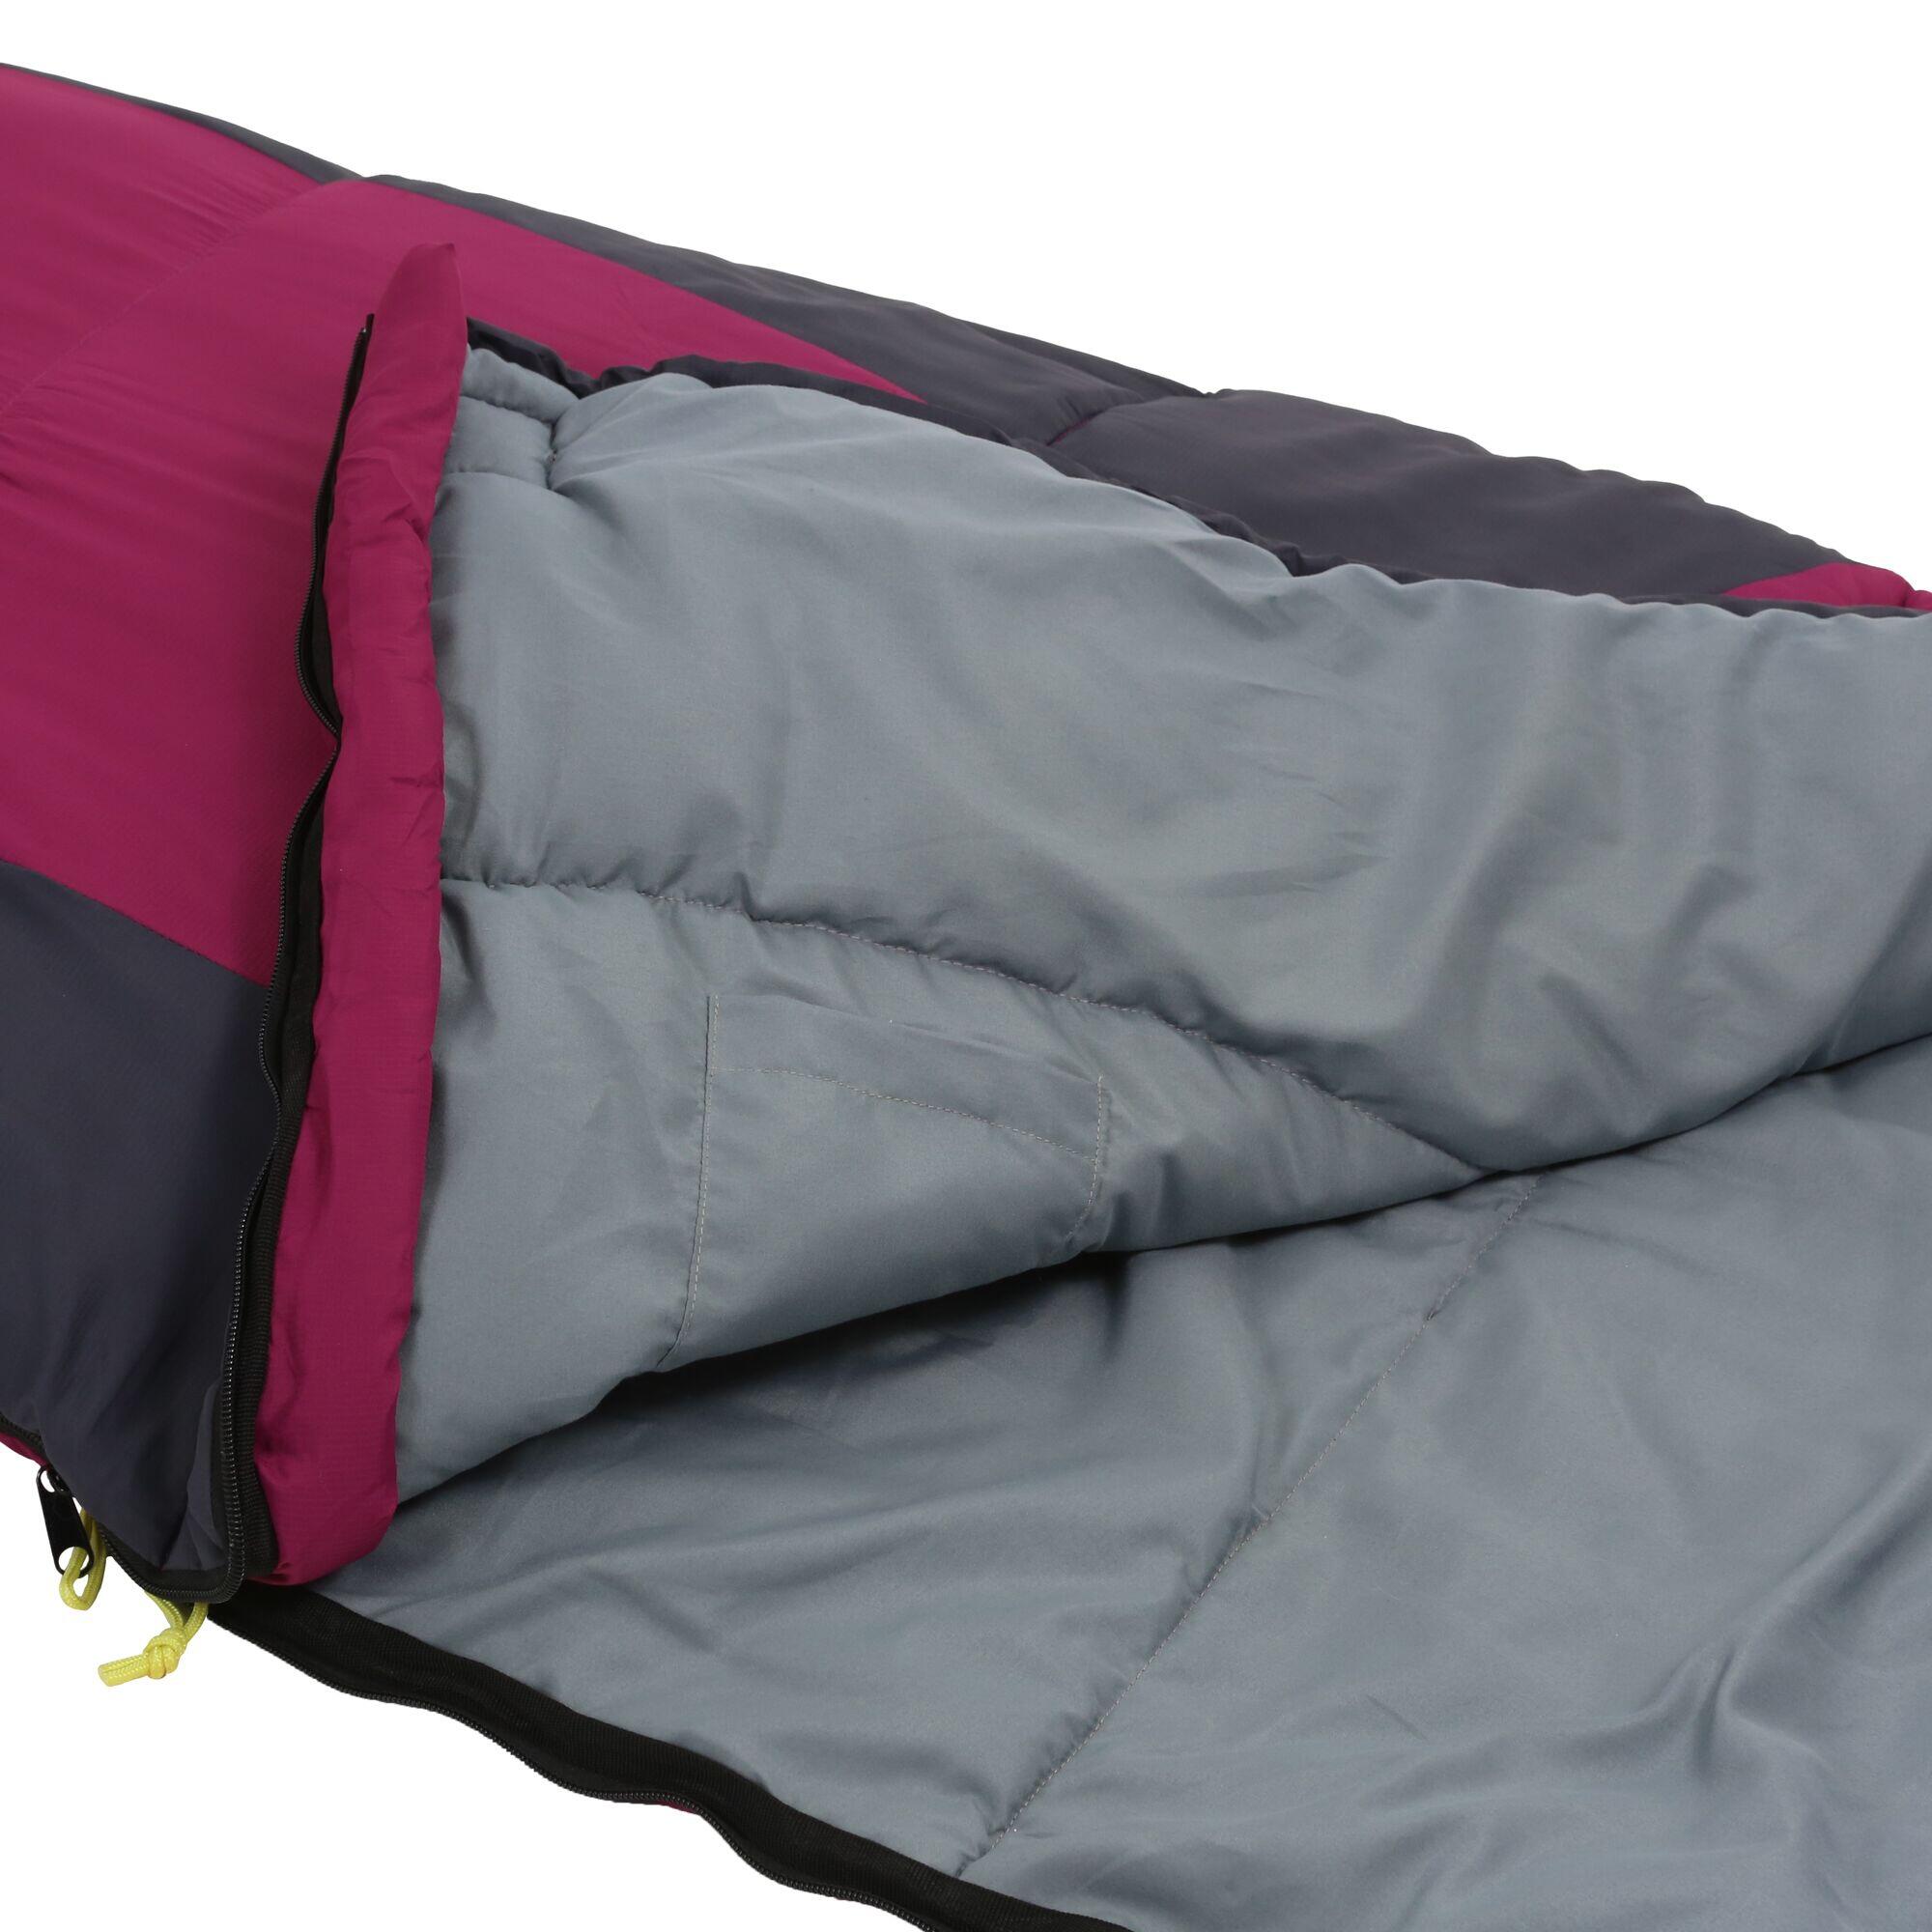 Hilo Boost Adults' Camping Sleeping Bag - Azalia Pink/Ebony 3/4